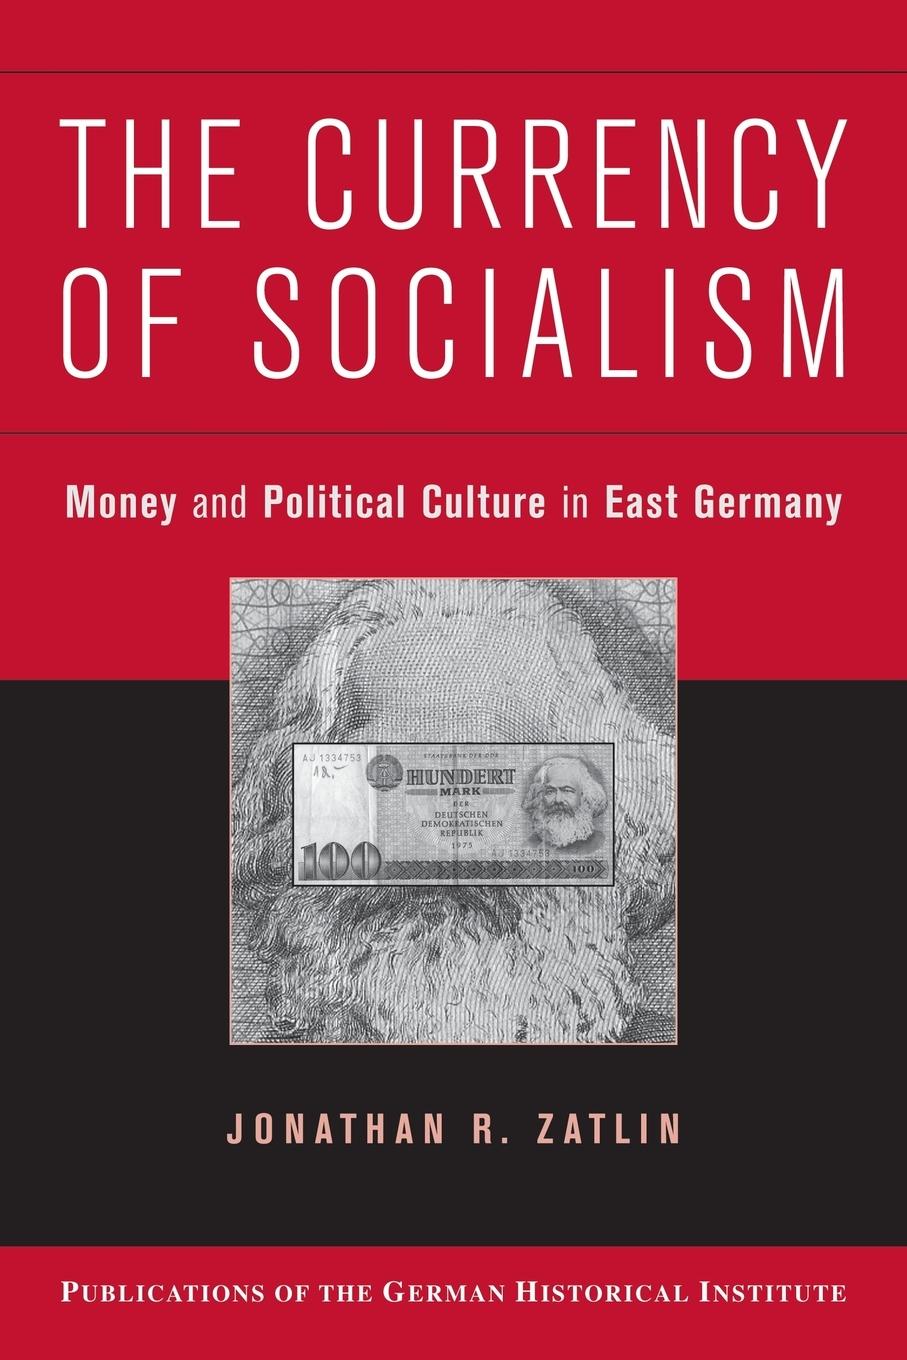 The Currency of Socialism / Jonathan R. Zatlin / Taschenbuch / Paperback / Englisch / 2014 / Cambridge University Press / EAN 9780521743600 - Zatlin, Jonathan R.